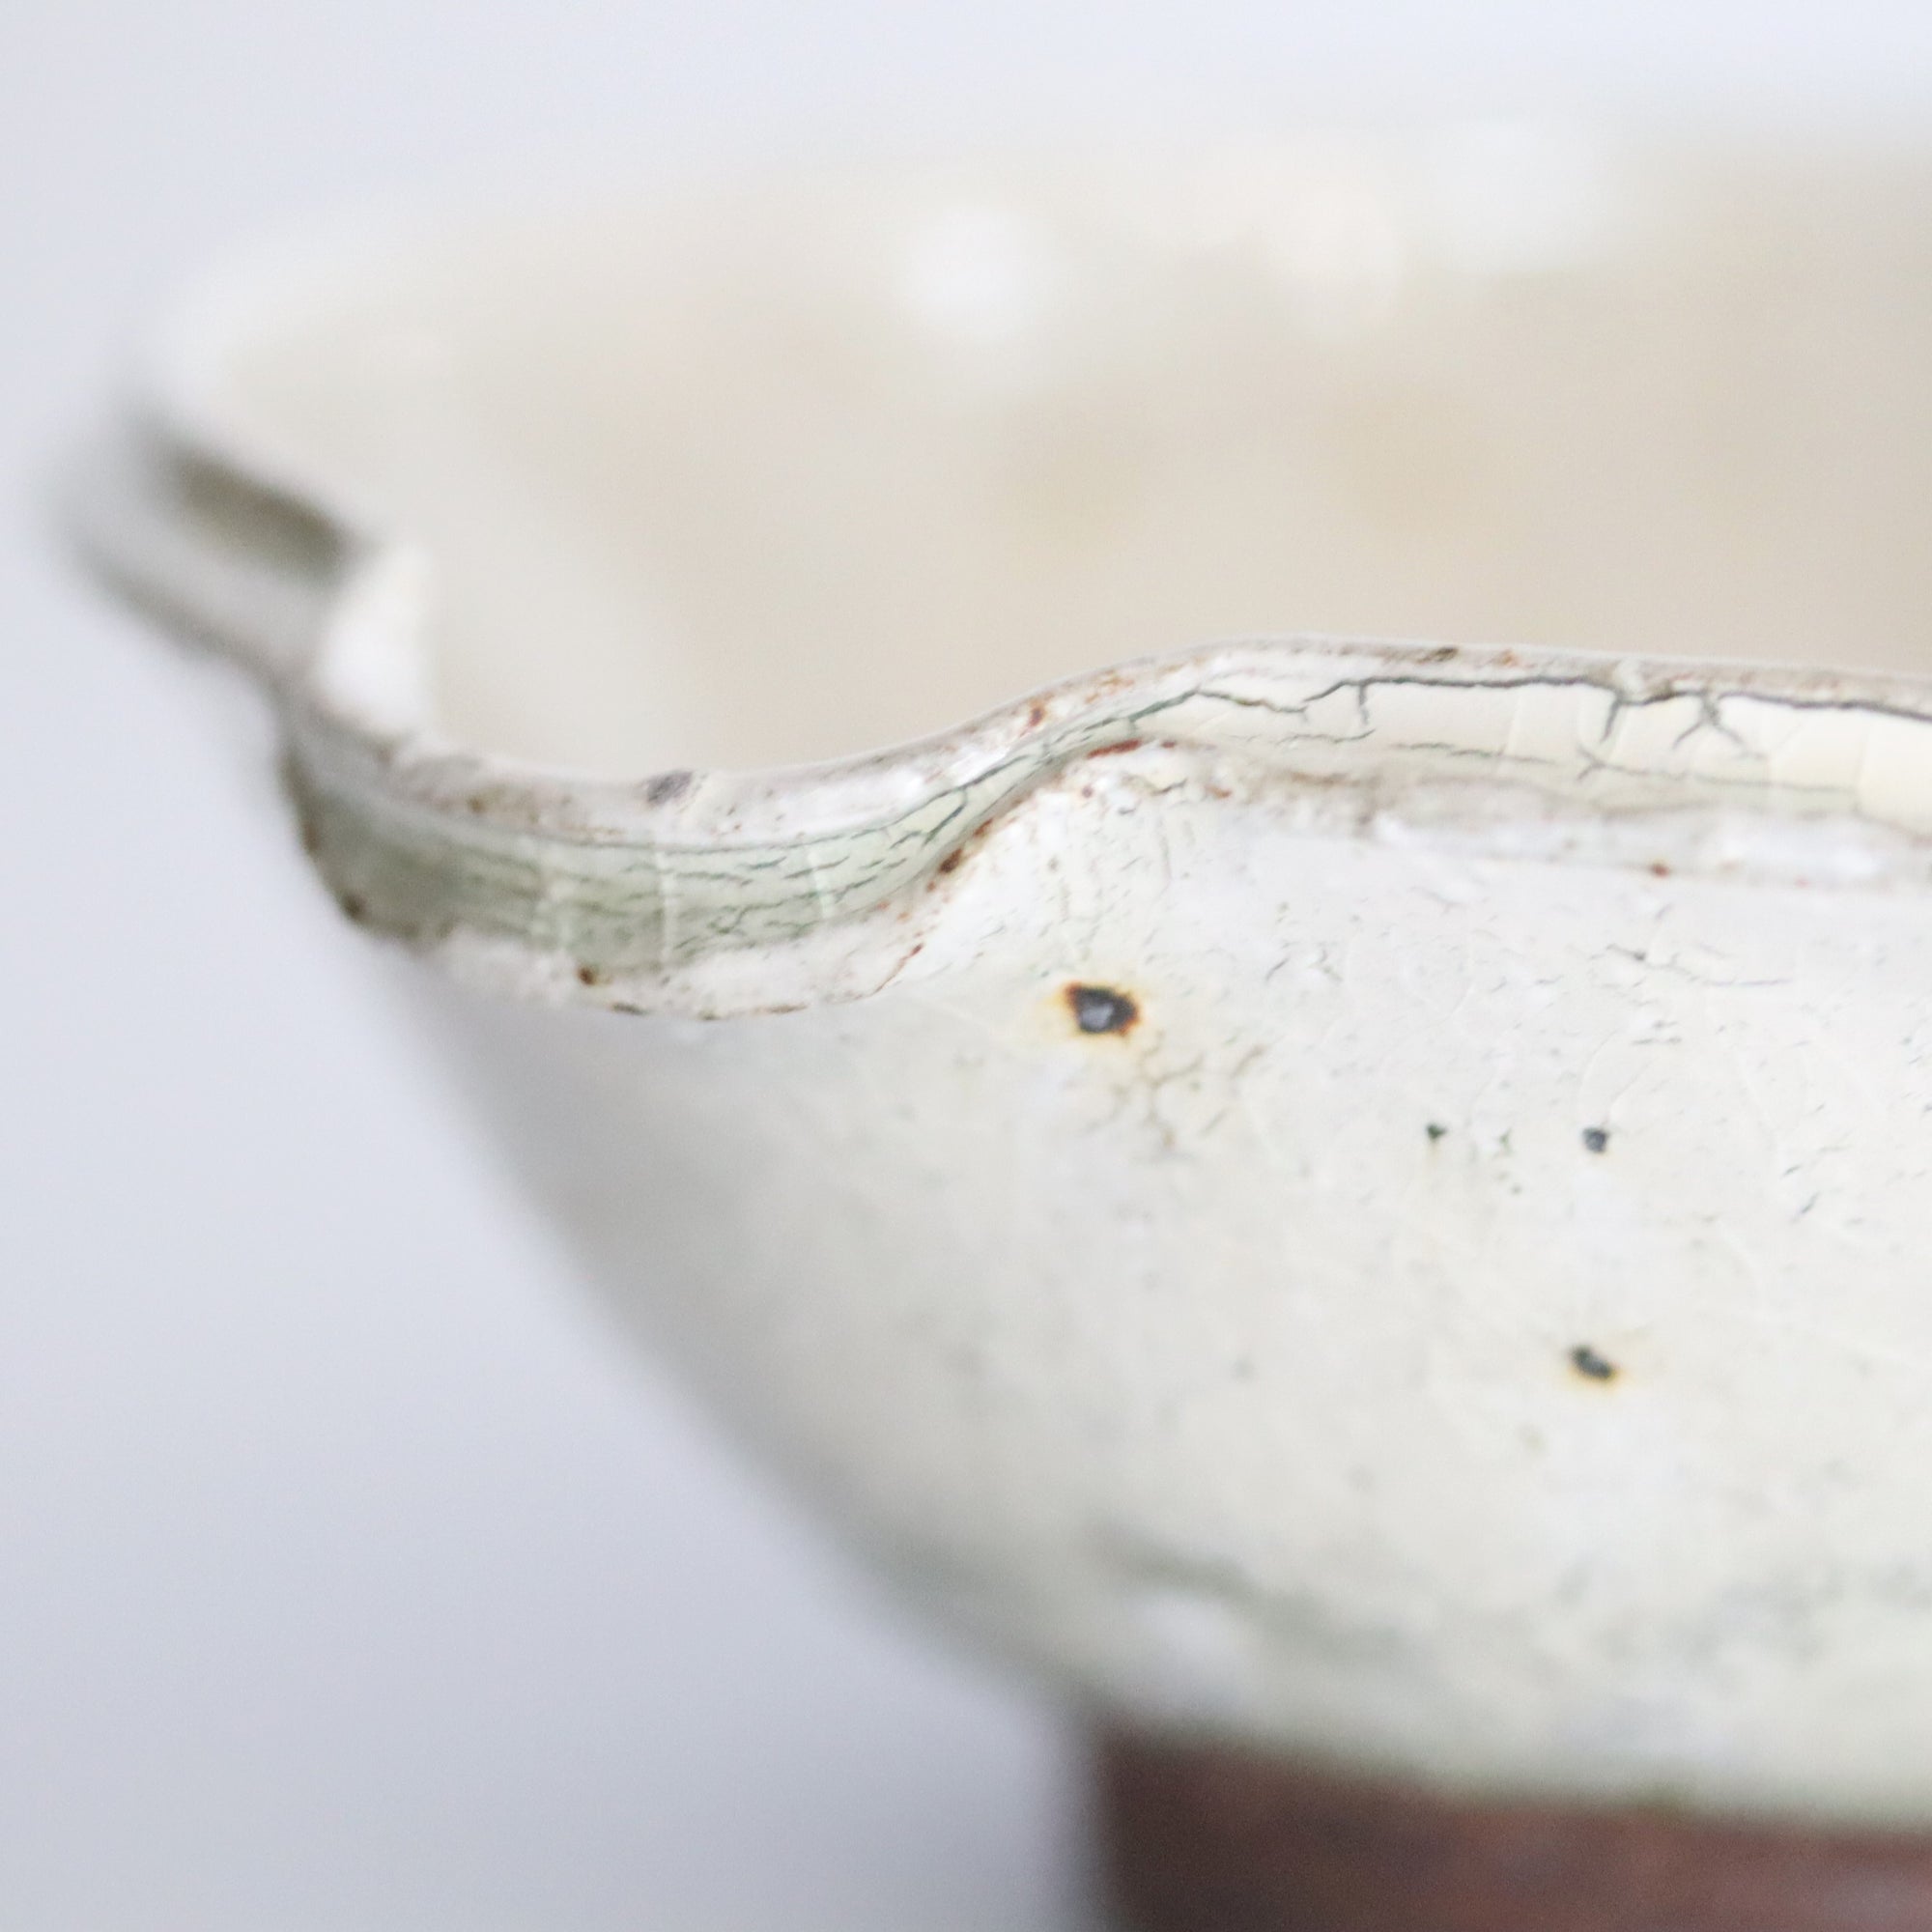 【Tomohiro Suzuki】Glass glazed 5sun Katakuchi bowl